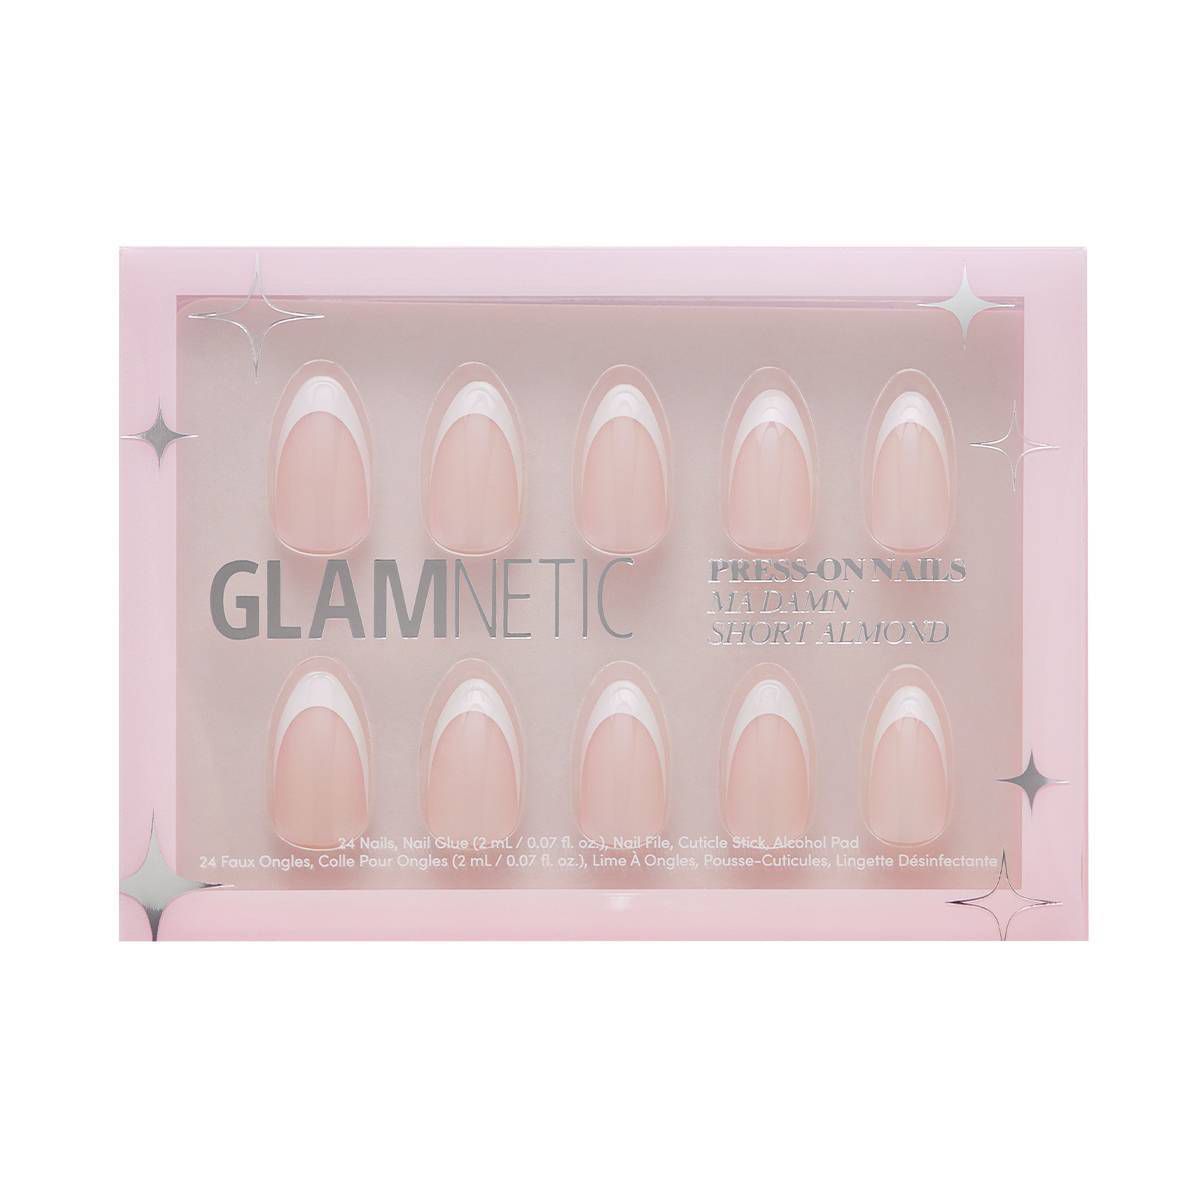 Glamnetic Press-On Manicure Women's Fake Nails - Damn - 30ct - Ulta Beauty | Target